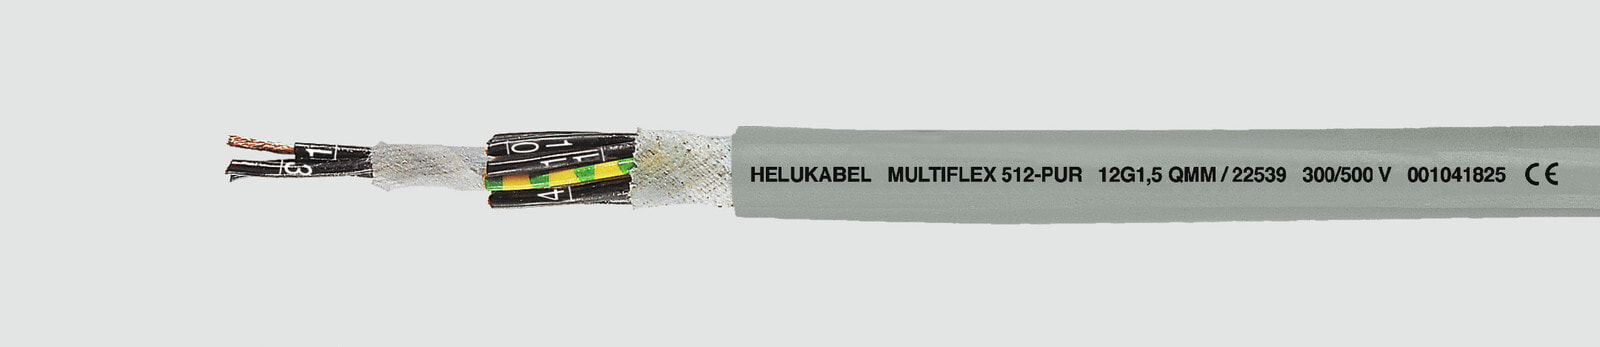 Helukabel MULTIFLEX 512-PUR - Medium voltage cable - Grey - Polyvinyl chloride (PVC) - Cooper - 2 x 1 mm² - 19.2 kg/km